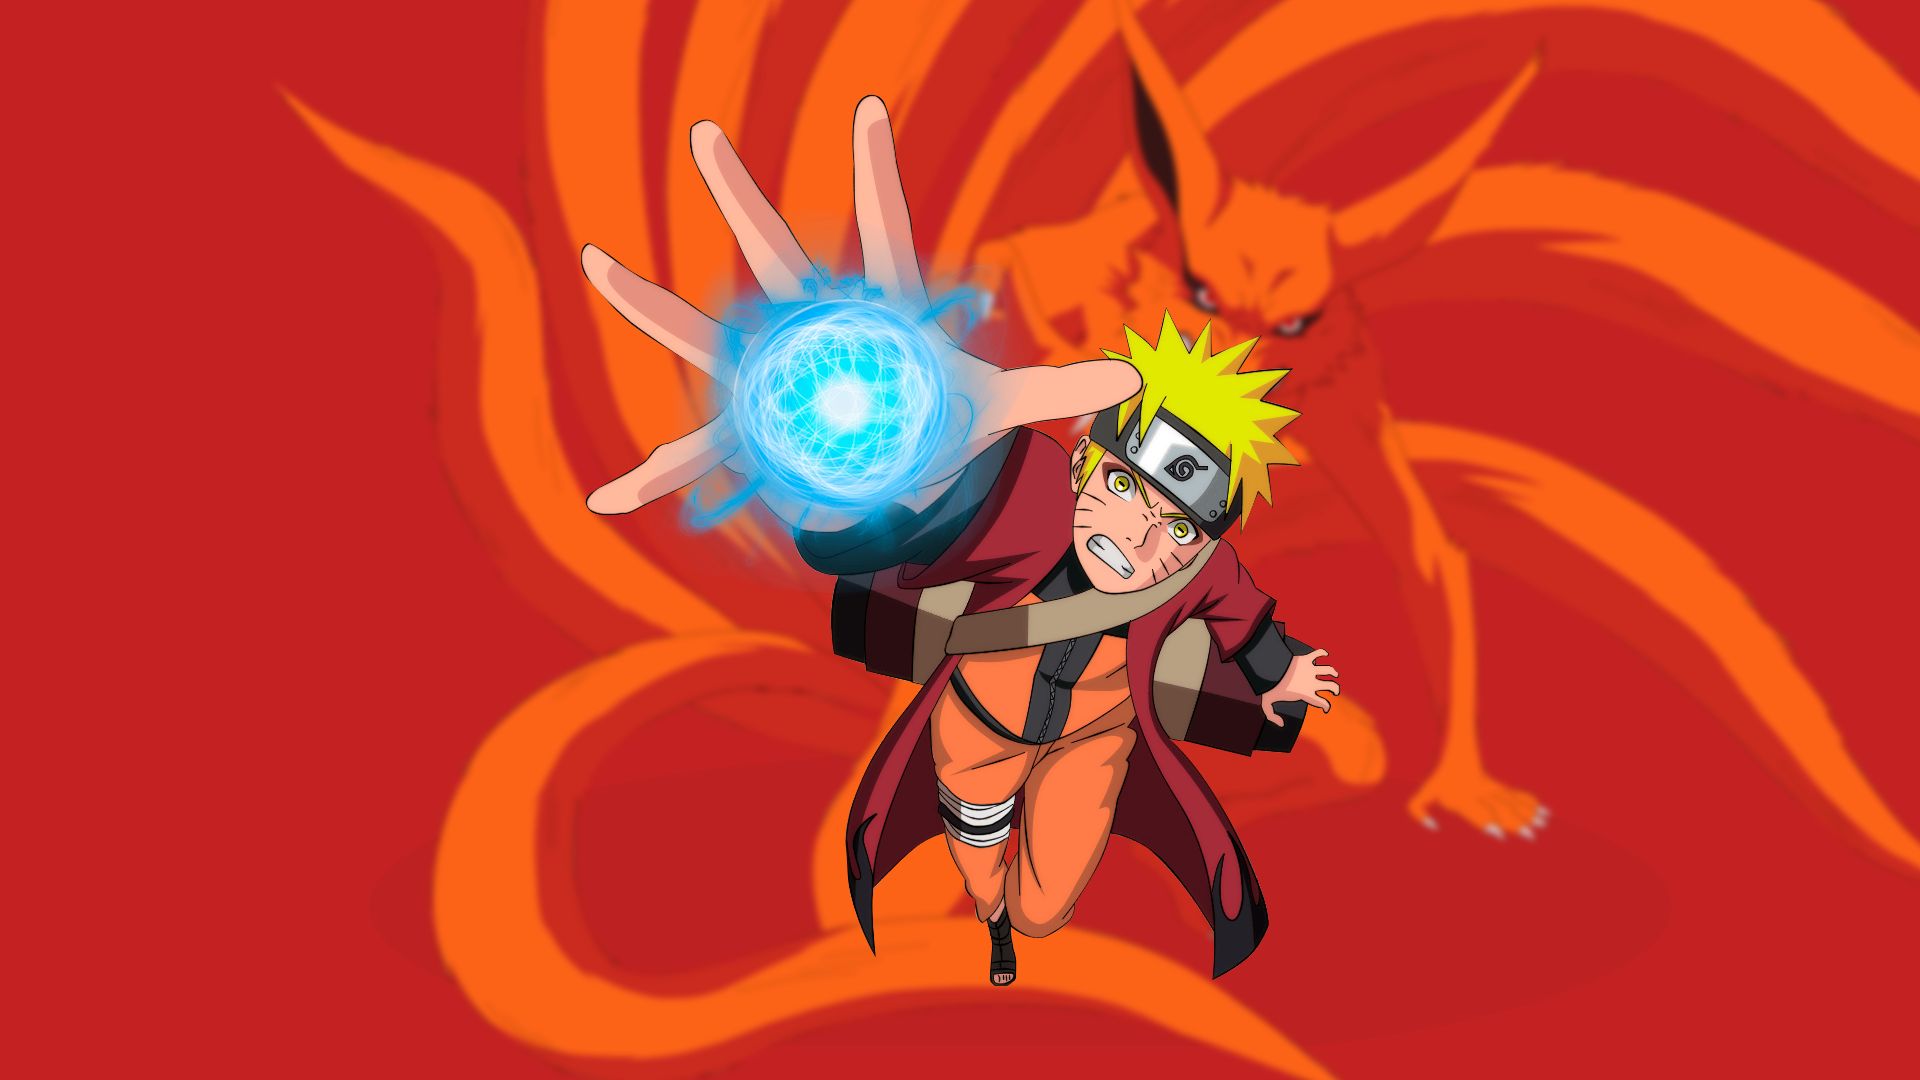 Téléchargez gratuitement l'image Naruto, Animé, Naruto Uzumaki, Kurama (Naruto), Rasengan (Naruto) sur le bureau de votre PC